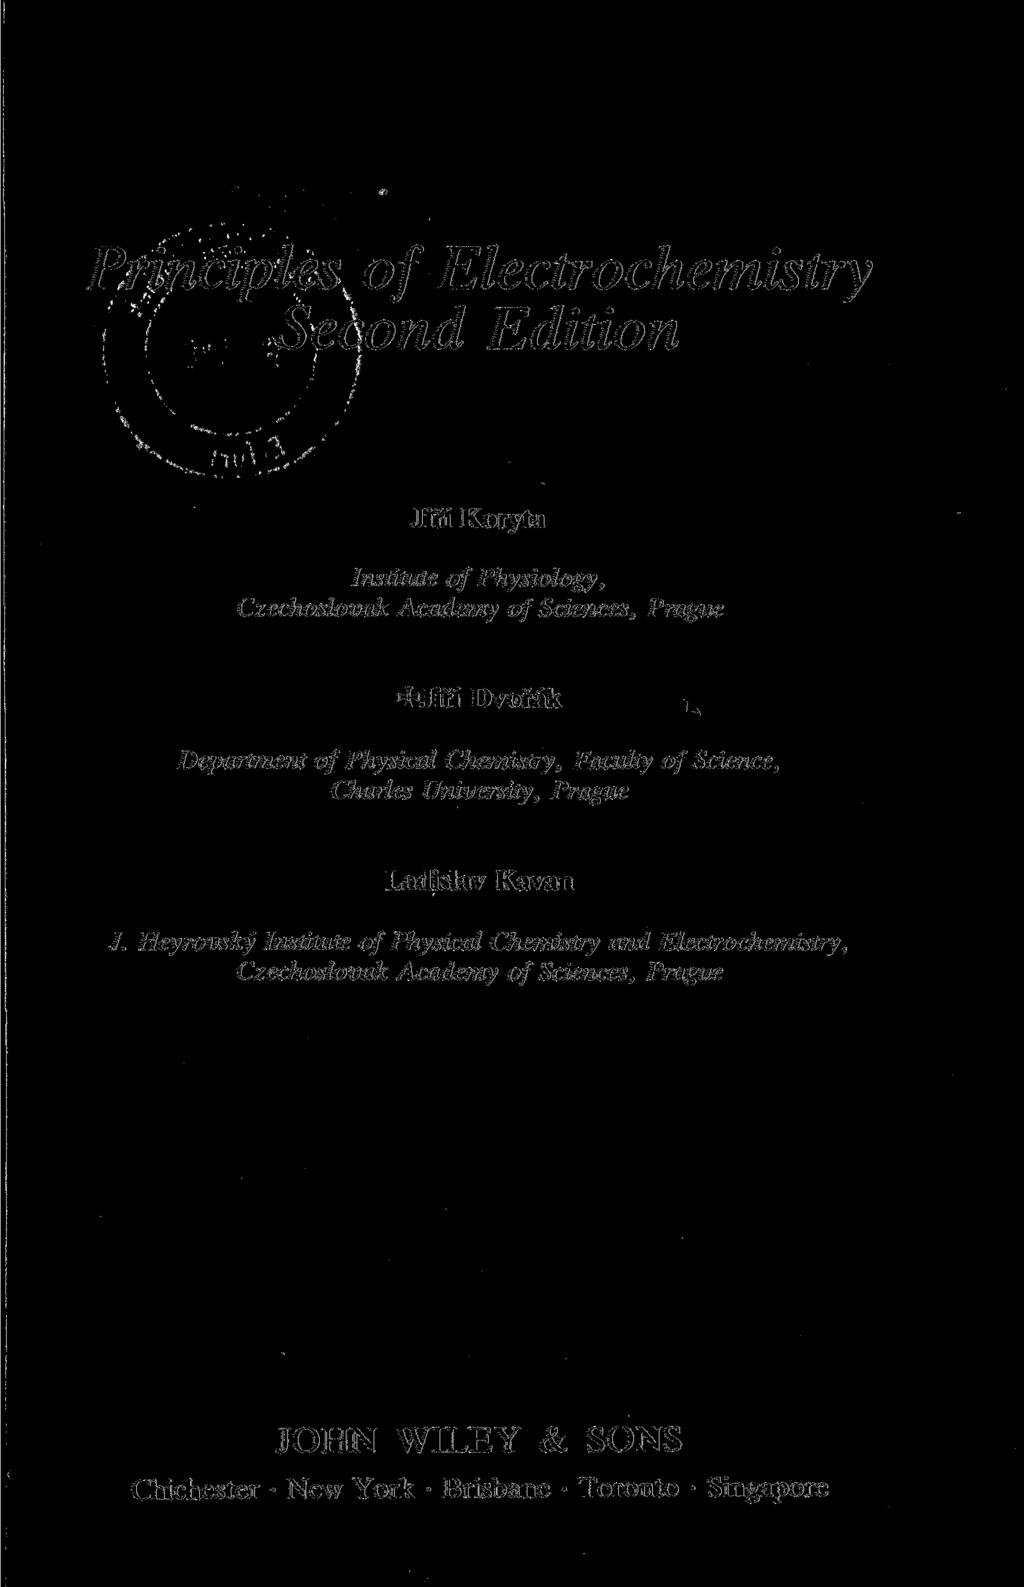 Principles of Electrochemistry Second Edition Jiri Koryta Institute of Physiology, Czechoslovak Academy of Sciences, Prague HKJin Dvorak Department of Physical Chemistry, Faculty of Science, Charles